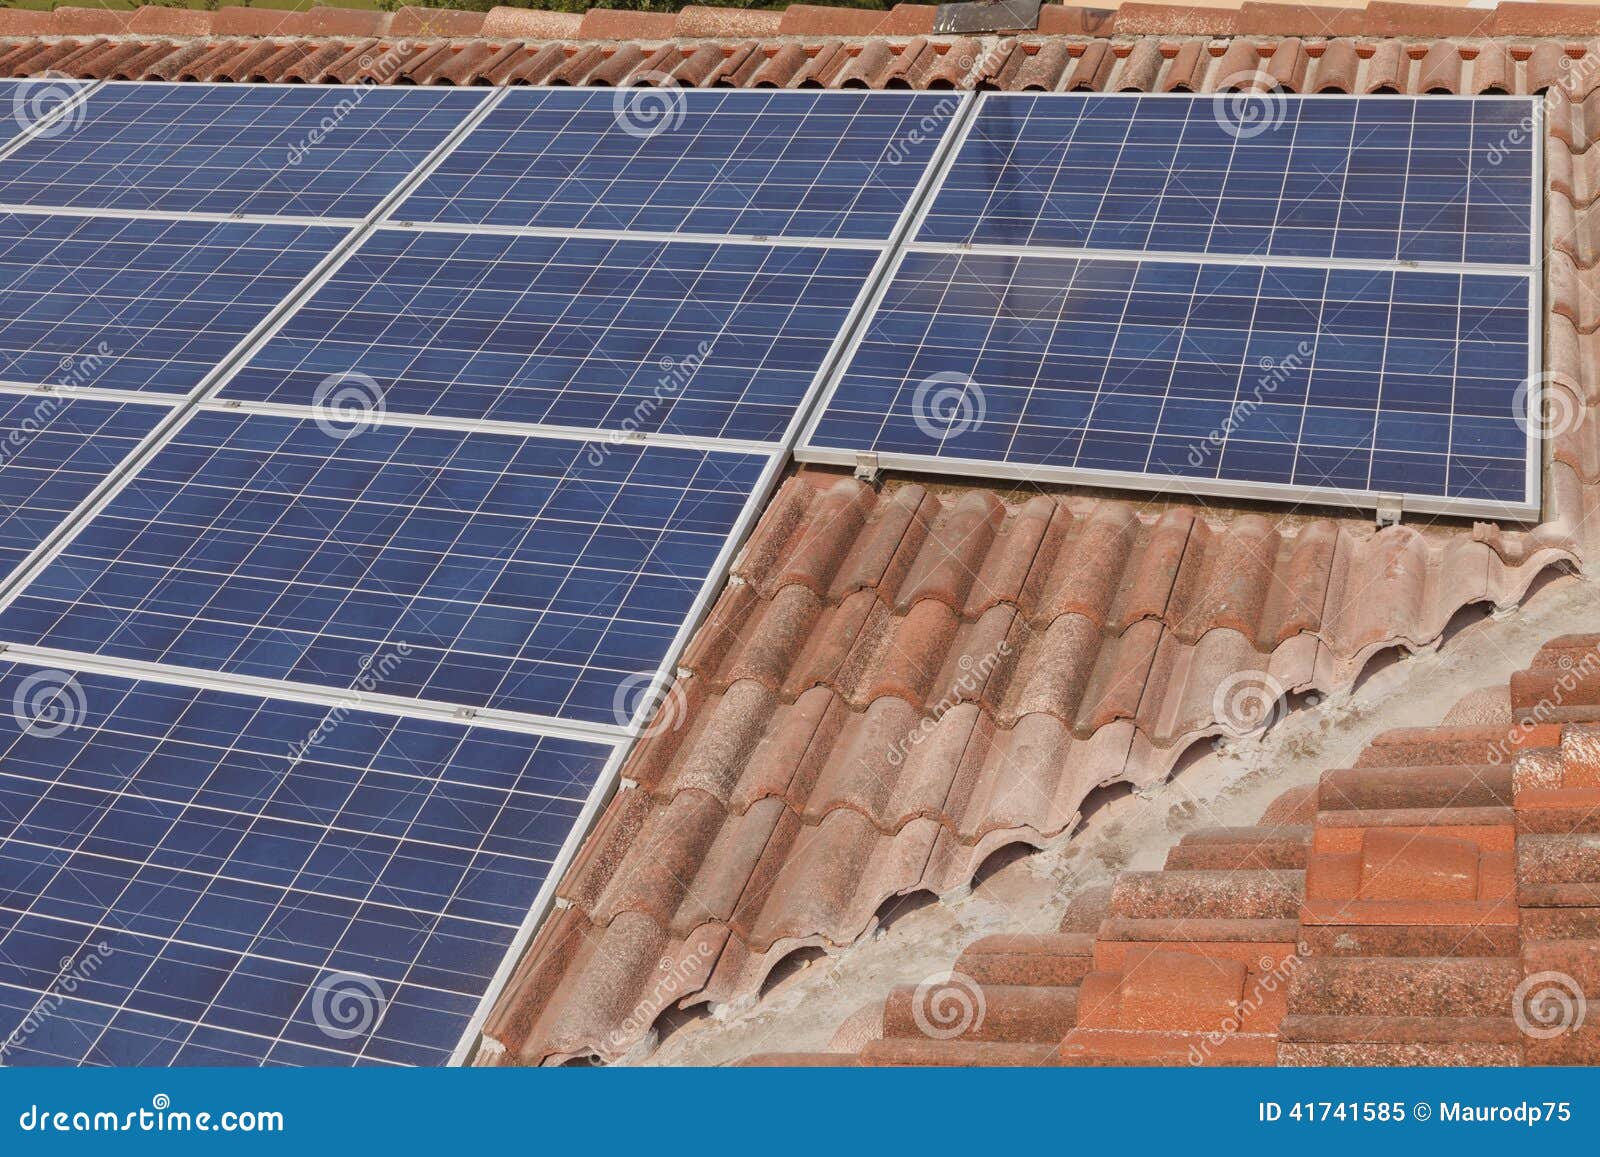 photovoltaic solar power plant